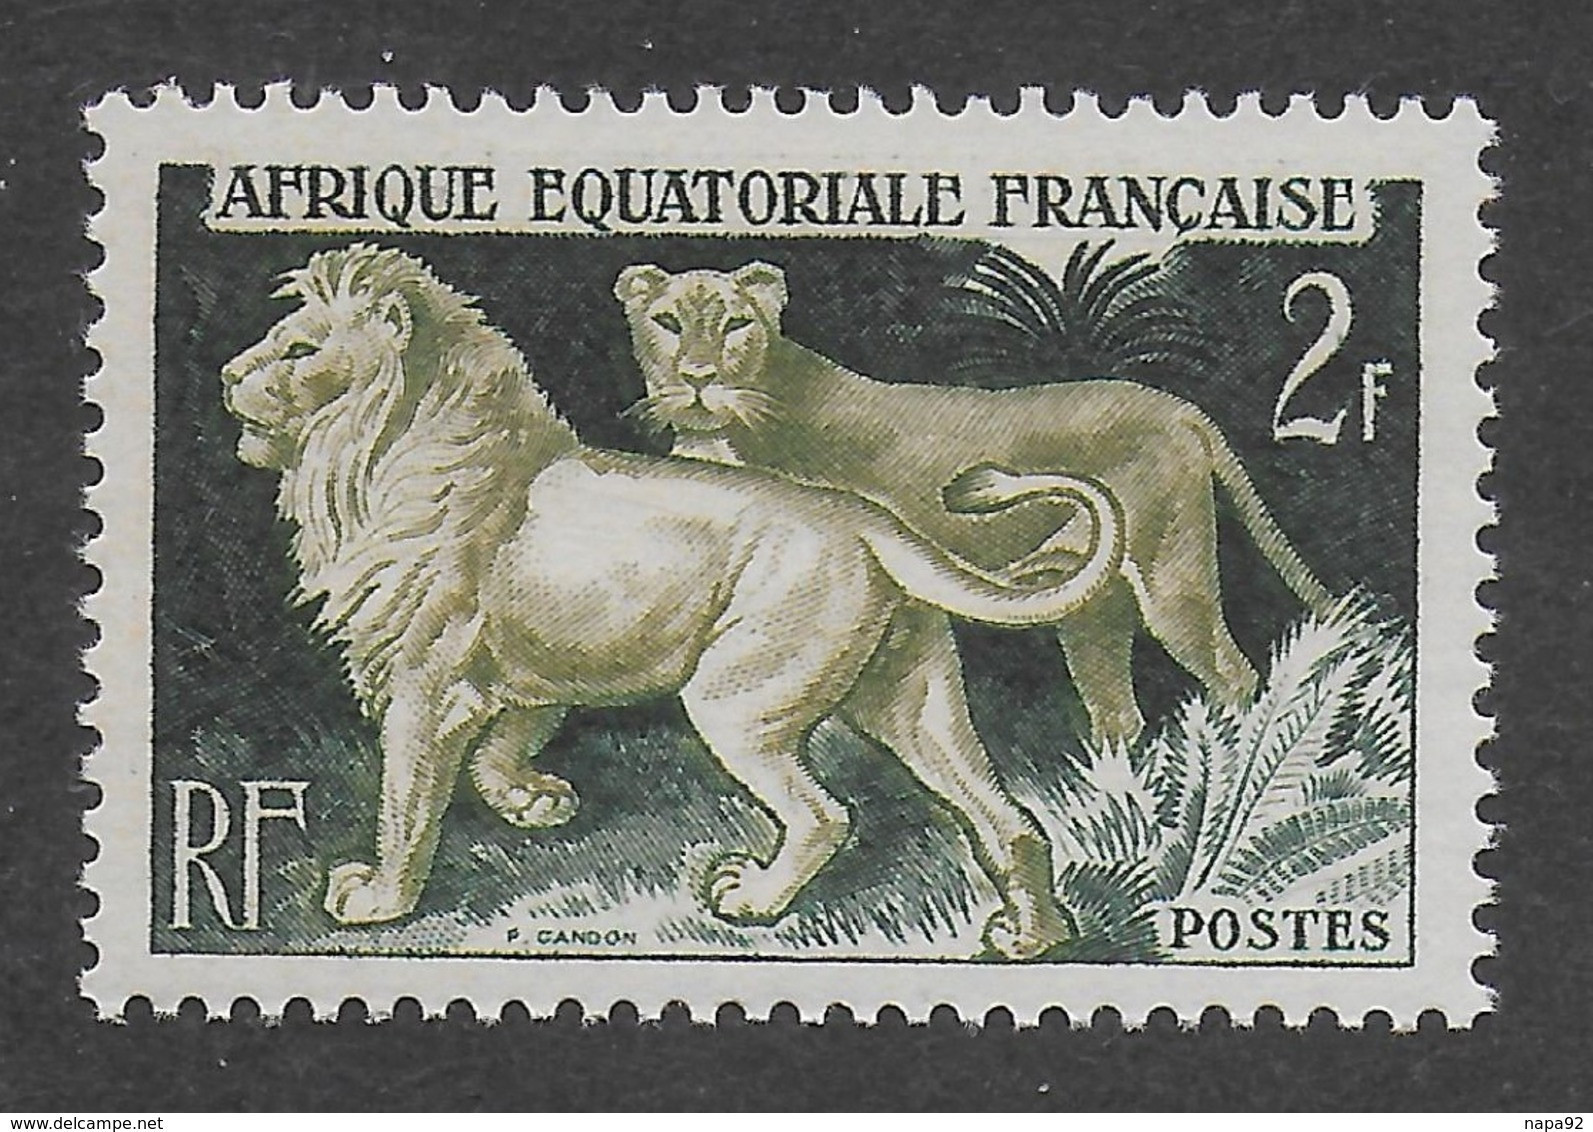 AFRIQUE EQUATORIALE FRANCAISE - AEF - A.E.F. - 1957 - YT 239** - MNH - Nuovi